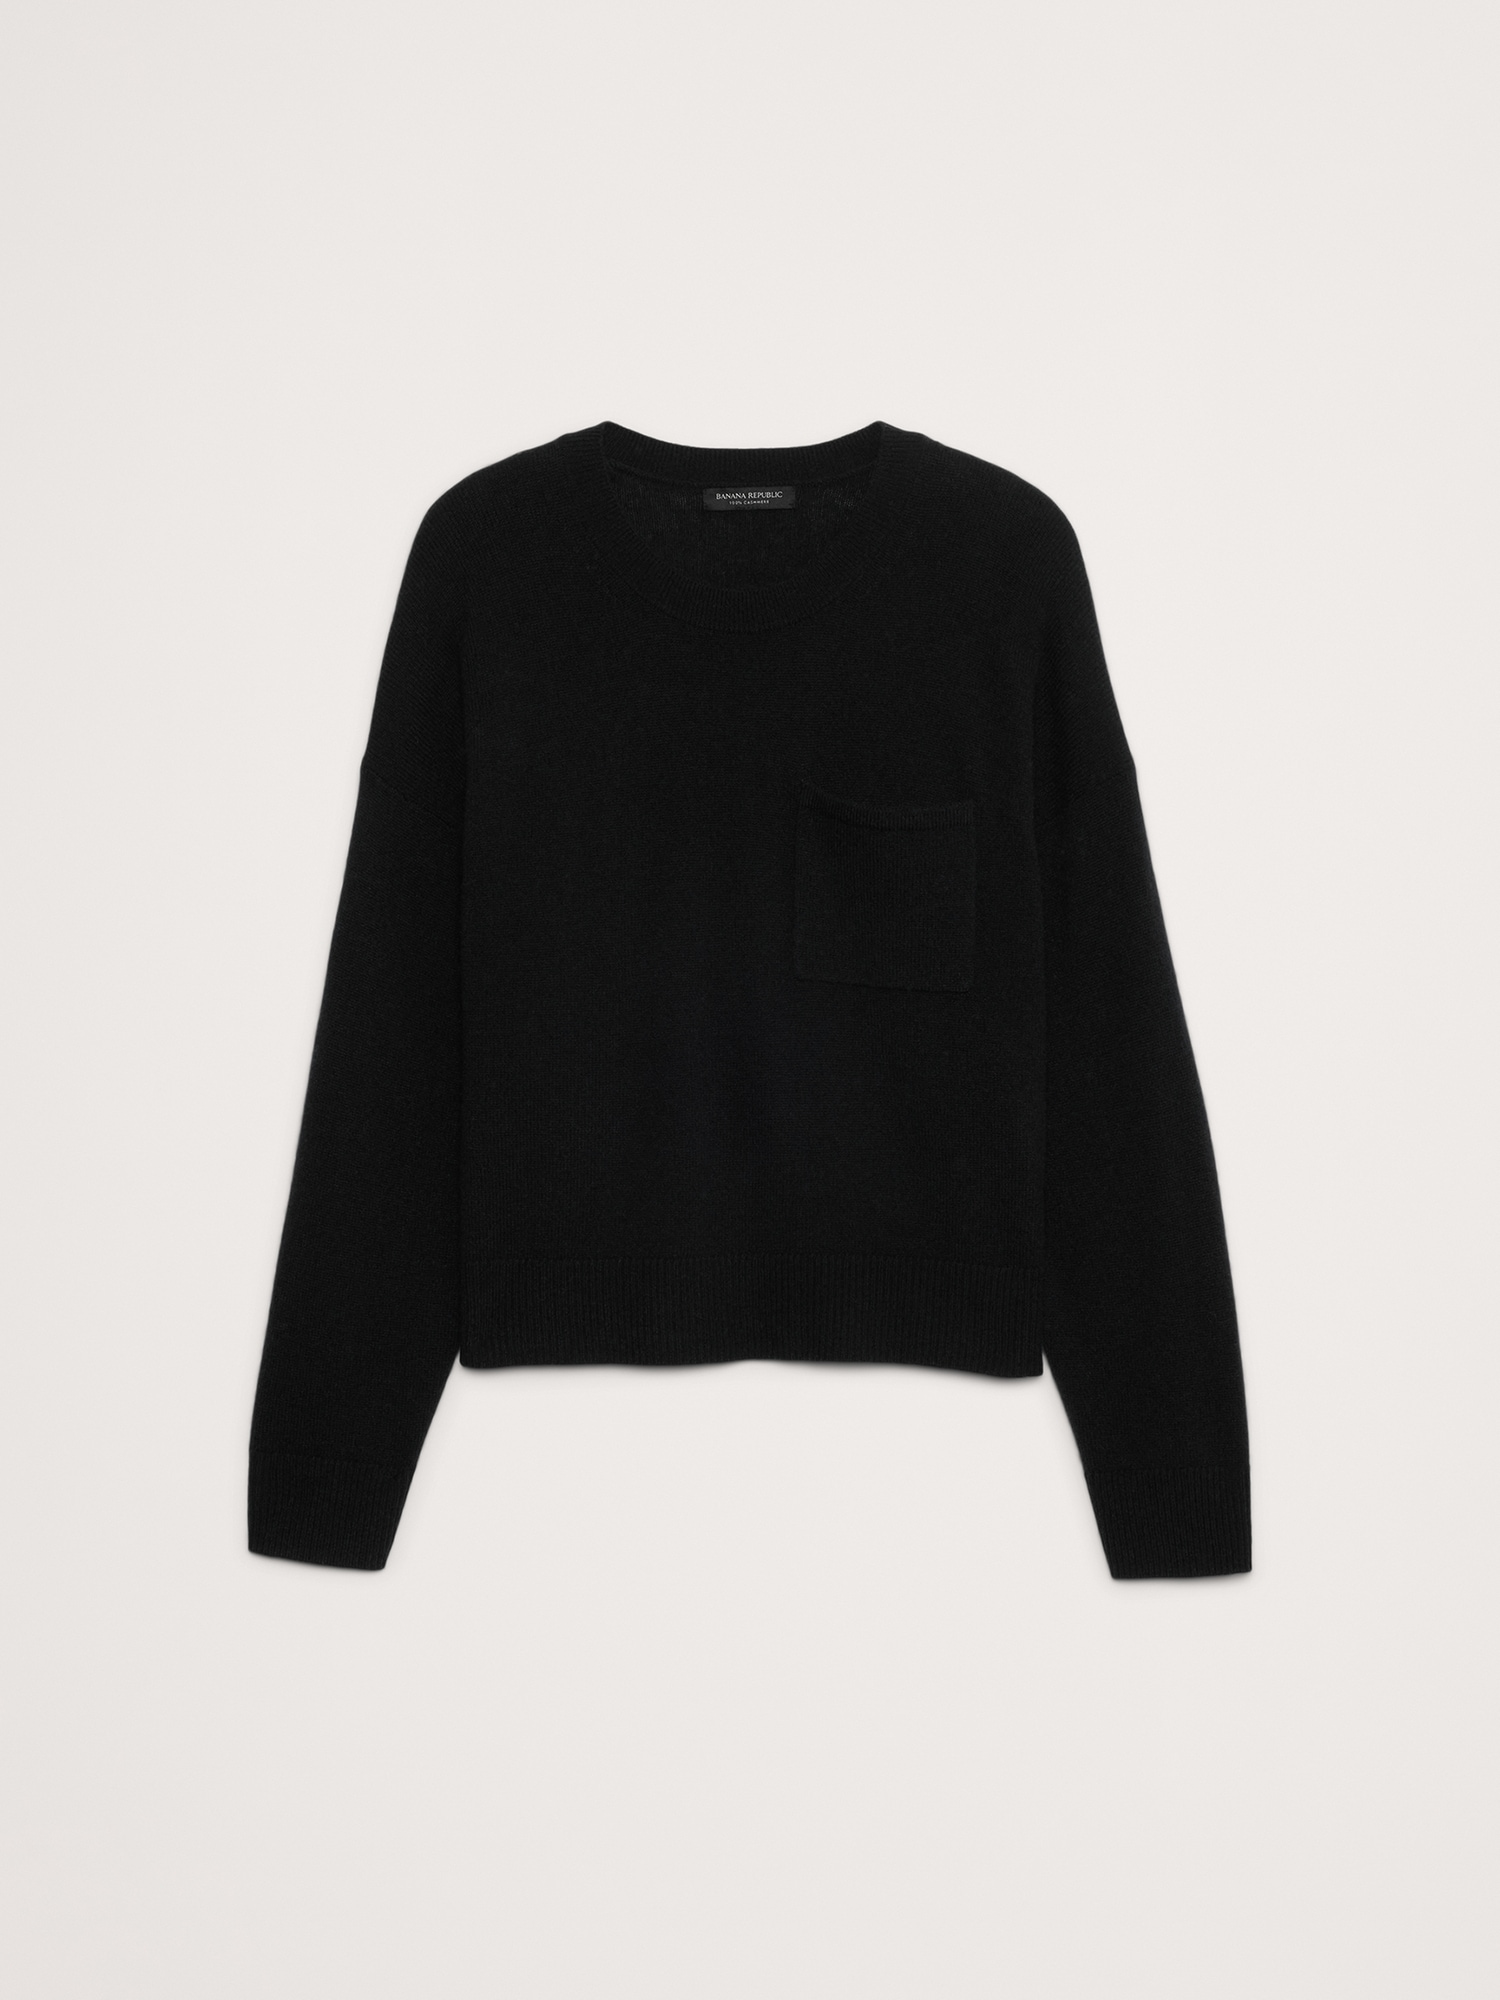 Caro Cropped Lightweight Cashmere Sweater